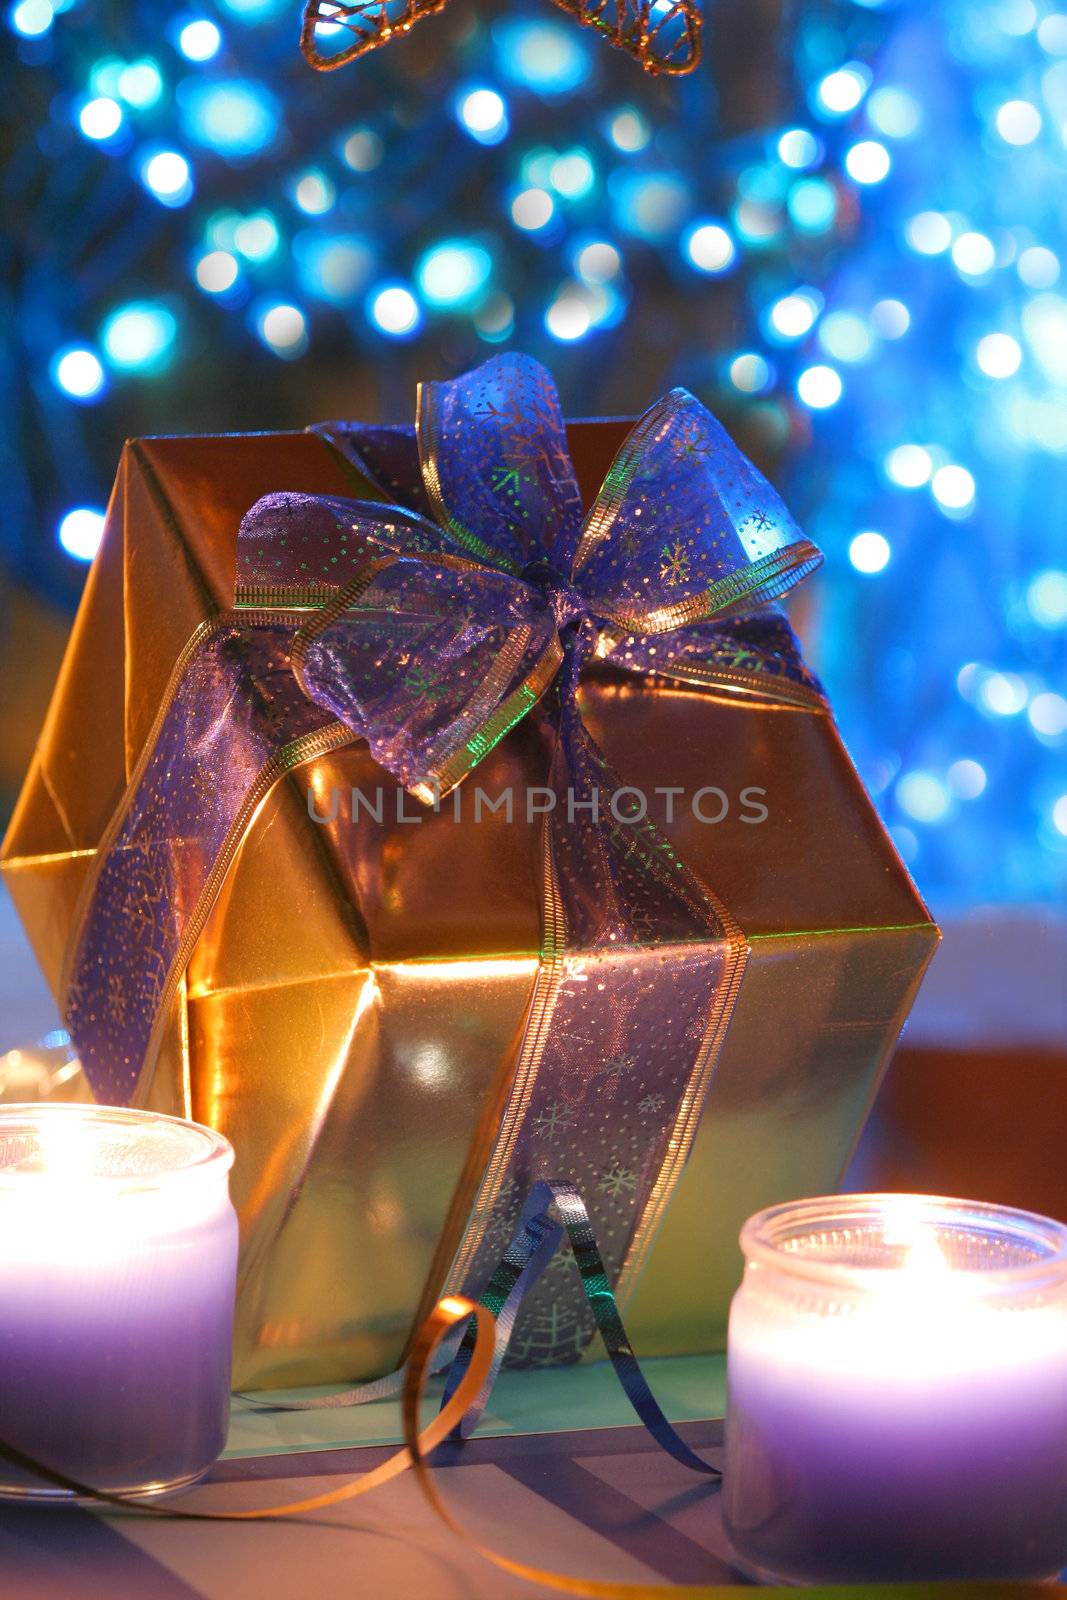 Elegant gold present with blue ribbons against backdrop of blue lights